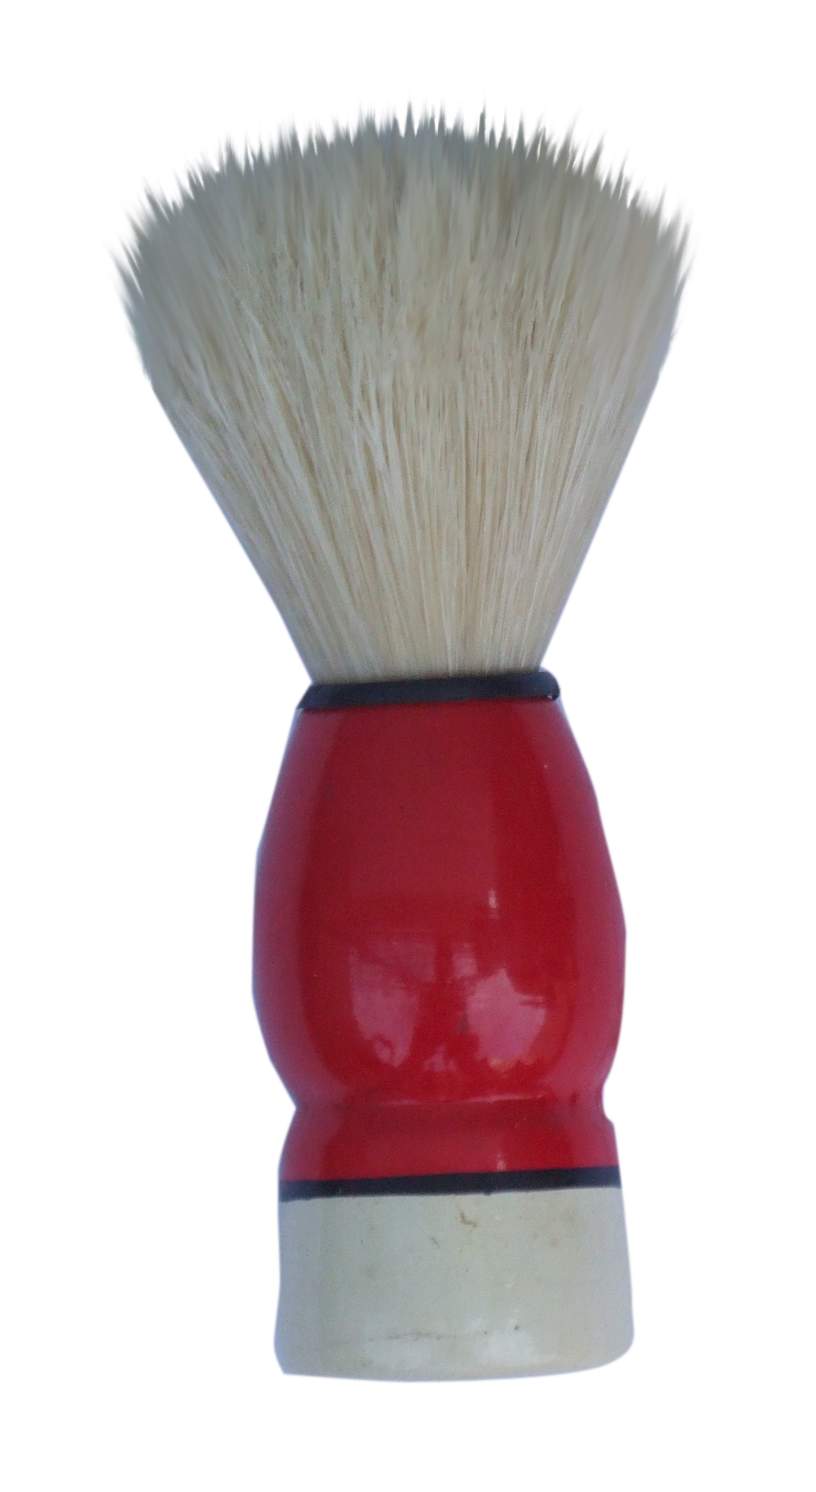 shaving brush